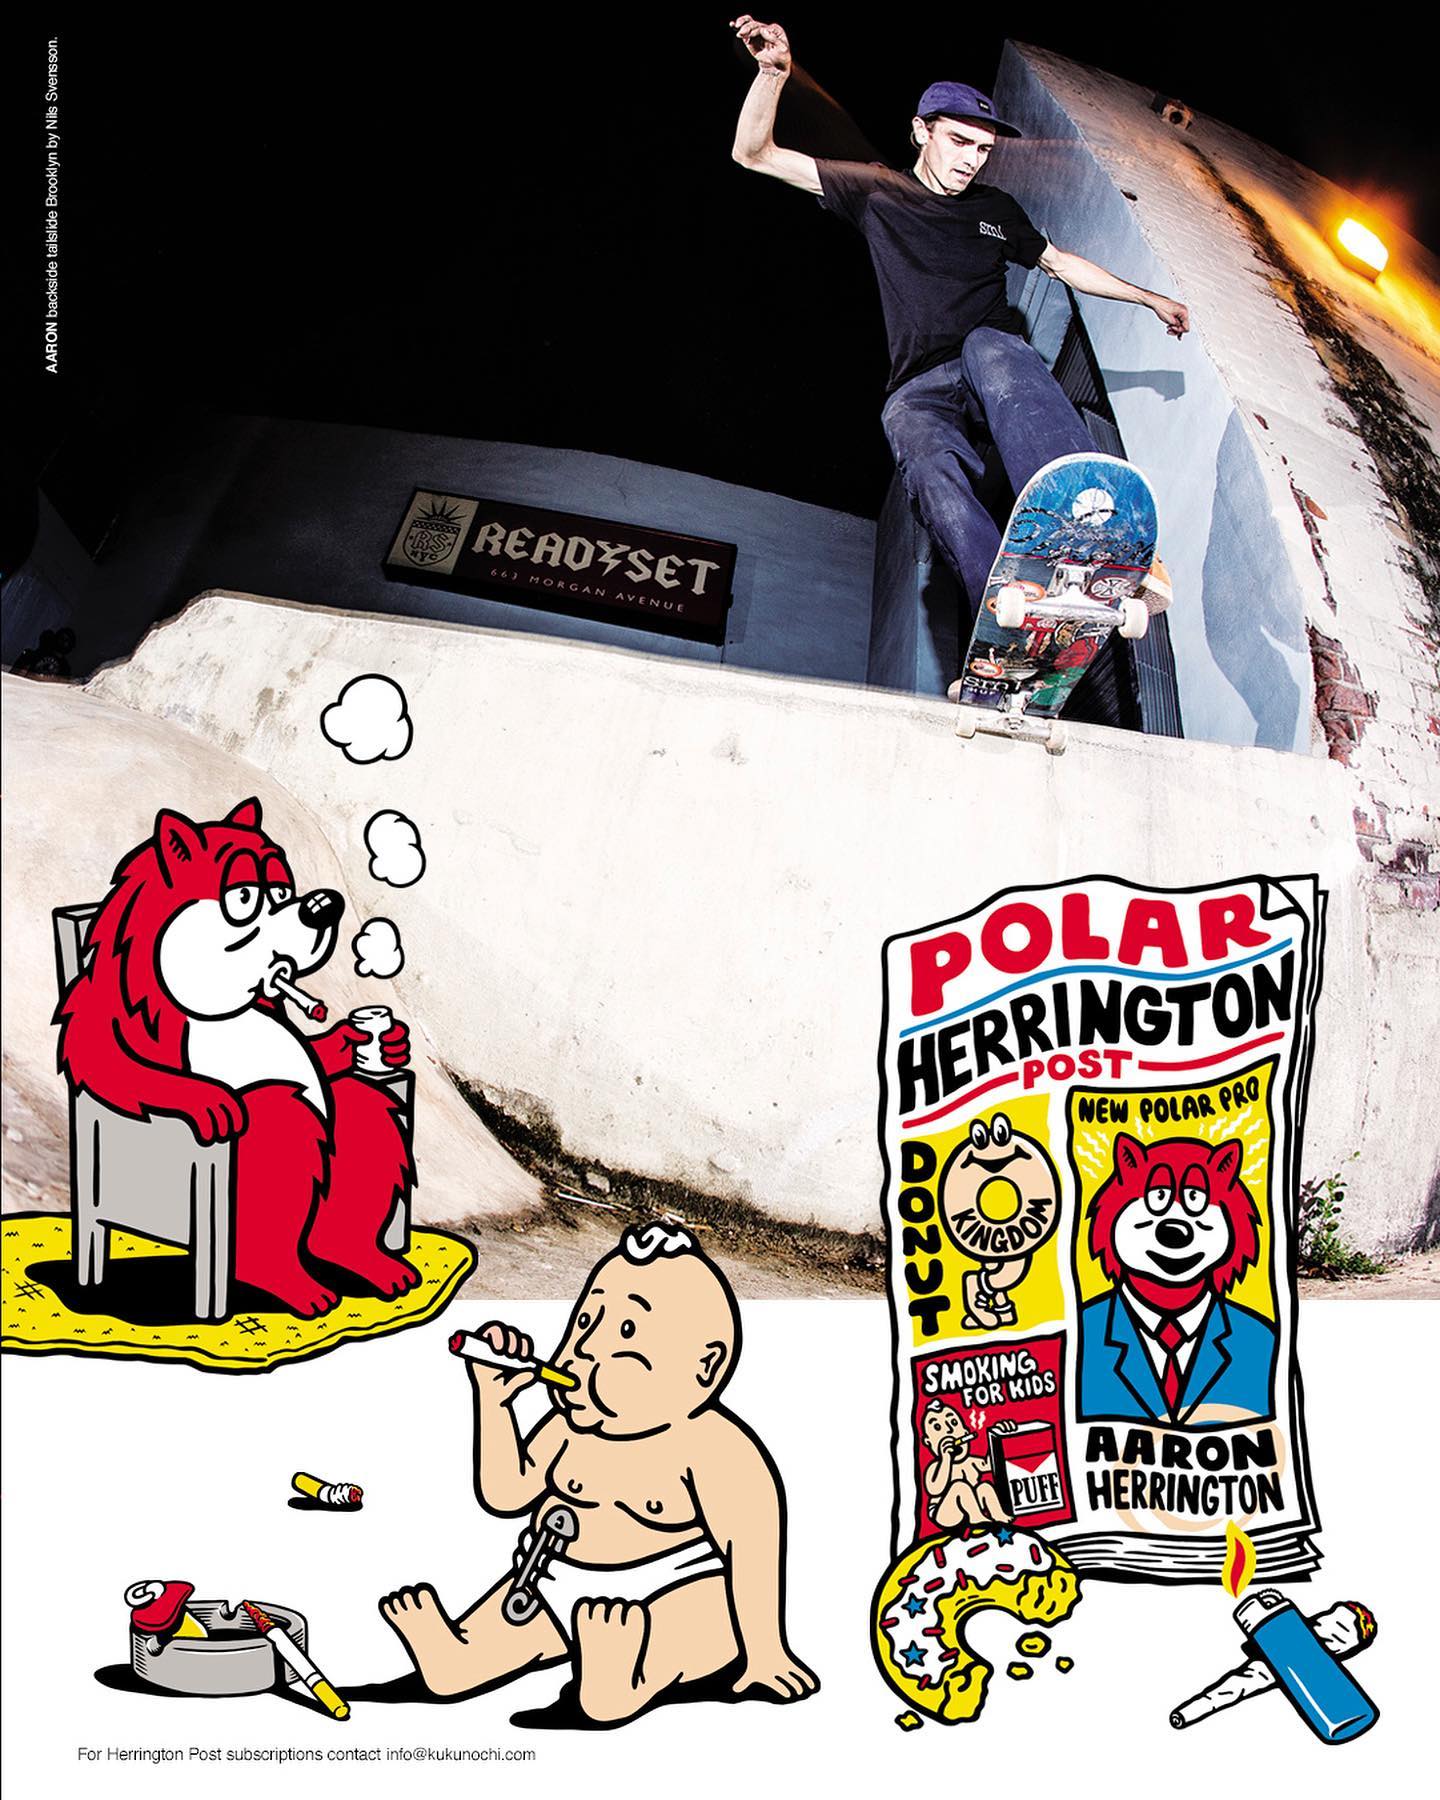 Aaron Herrington Polar Skate Co Advert with artwork by Jacob Ovgren